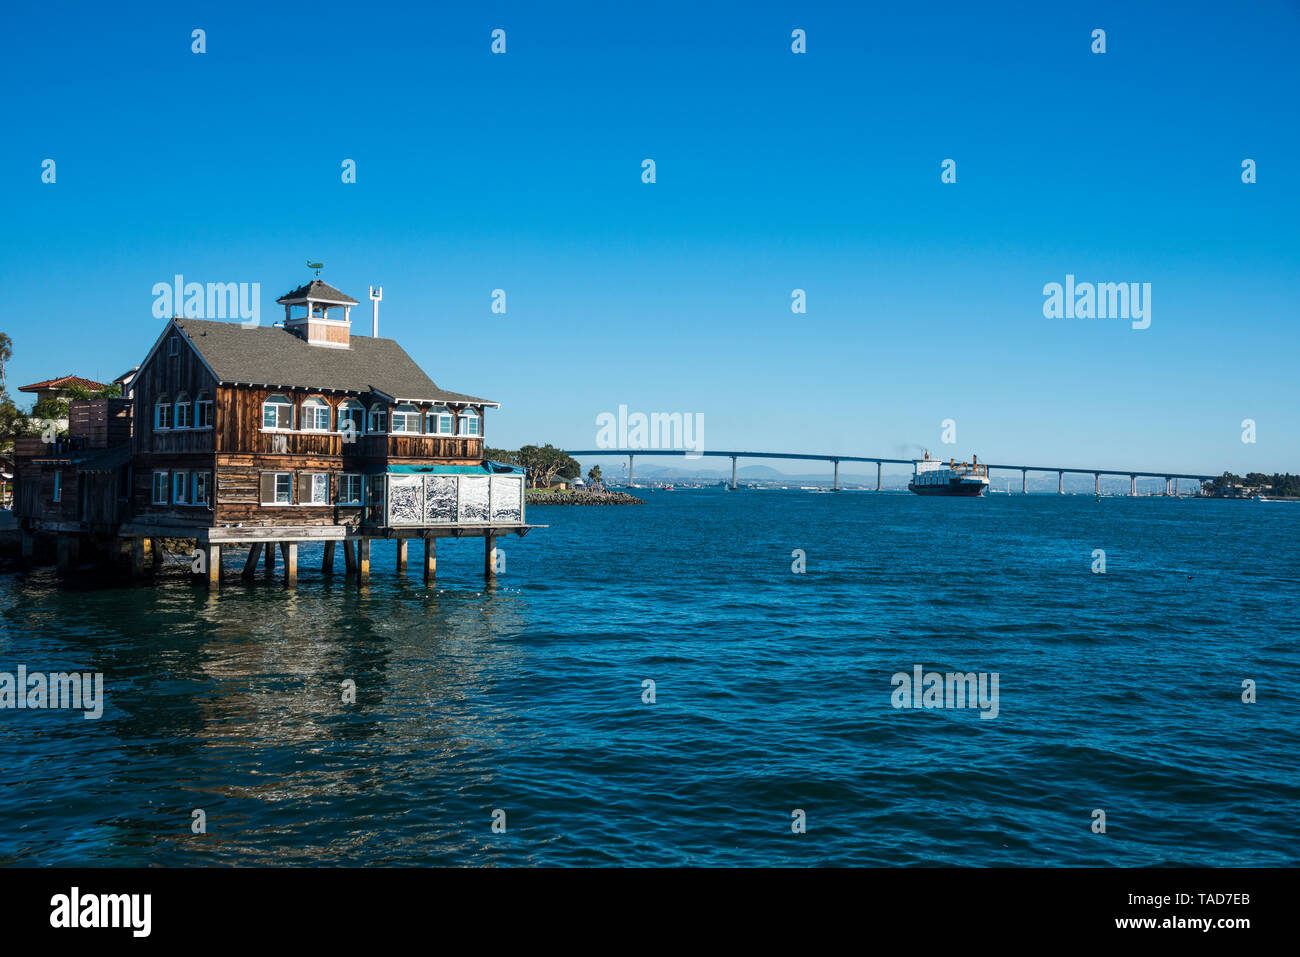 USA, California, San Diego, Tuna harbor dockside market Stock Photo